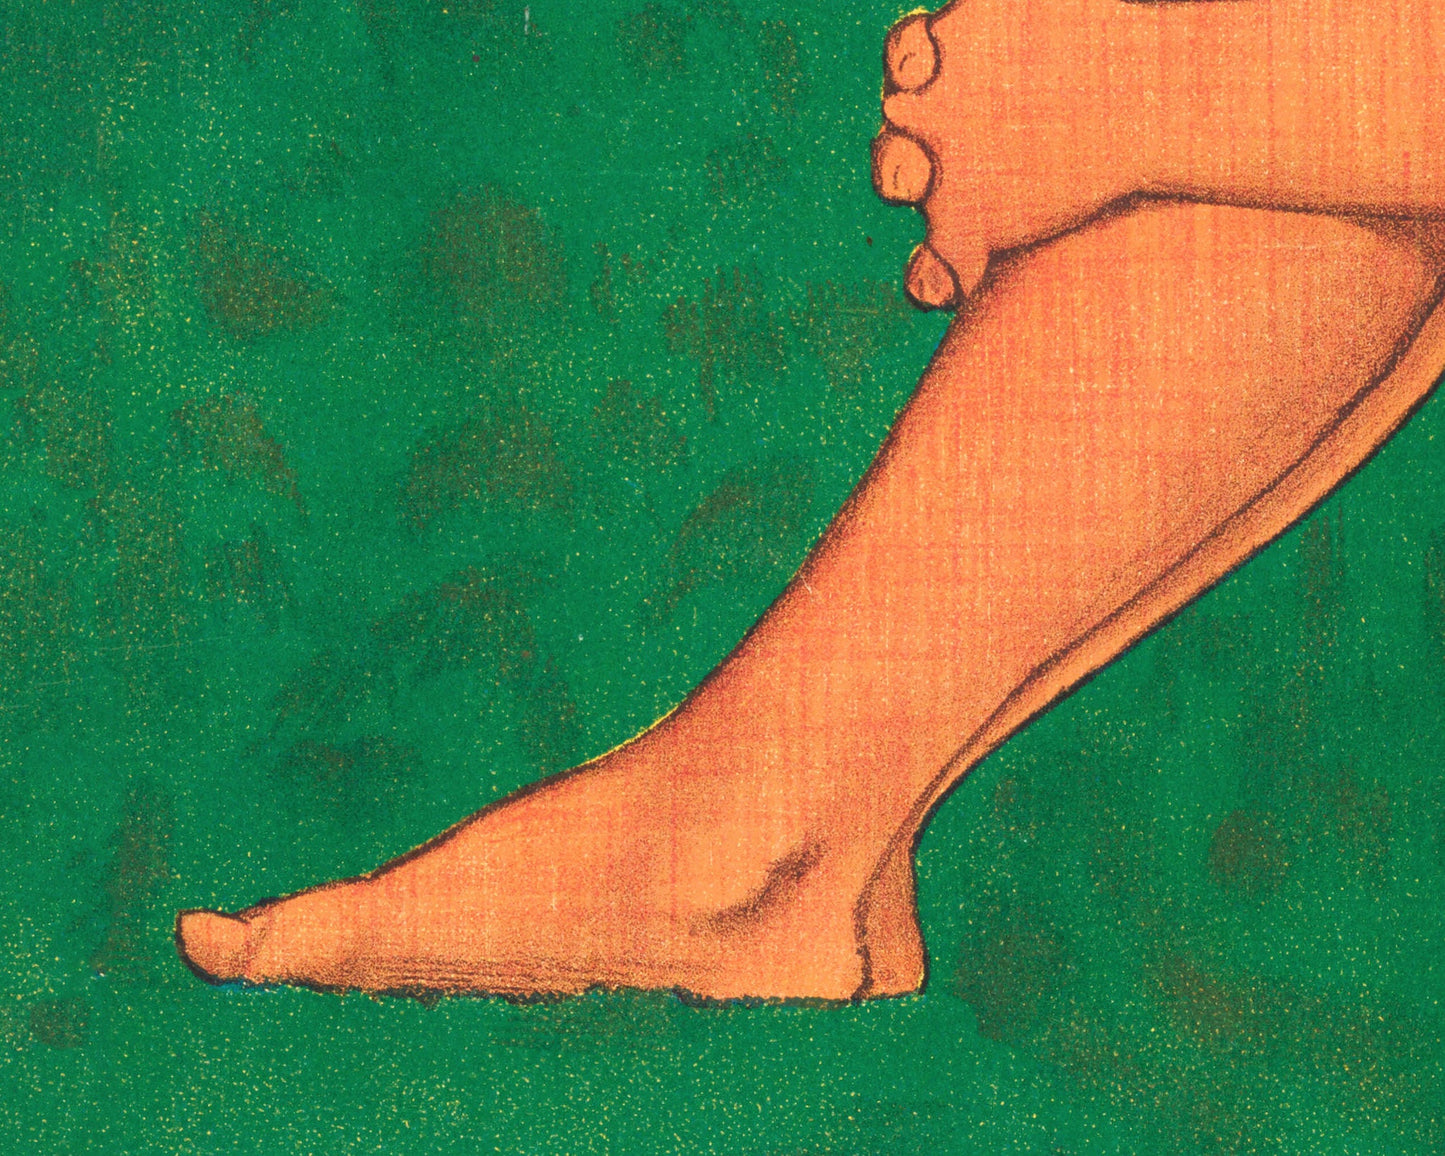 Vintage nude on grass fine art print | Maxfield Parrish | Feminine art | Art nouveau wall art | Magazine cover art | American illustrator